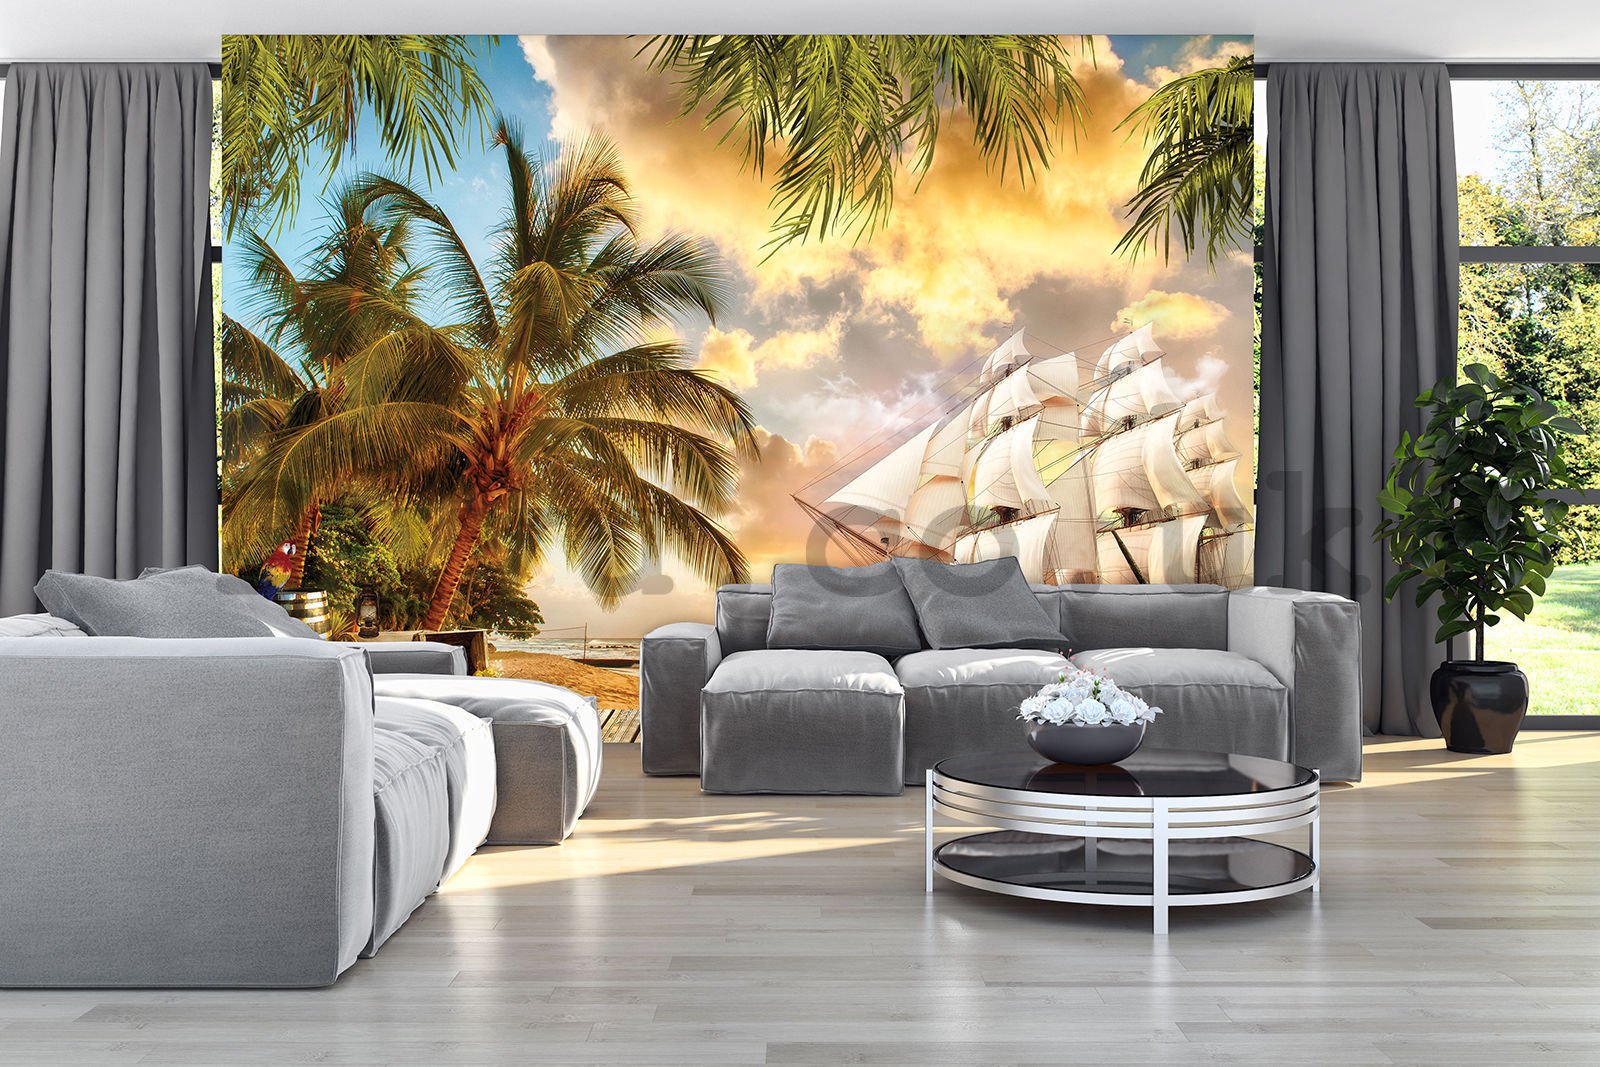 Wall mural vlies: Sailboat in paradise - 184x254 cm